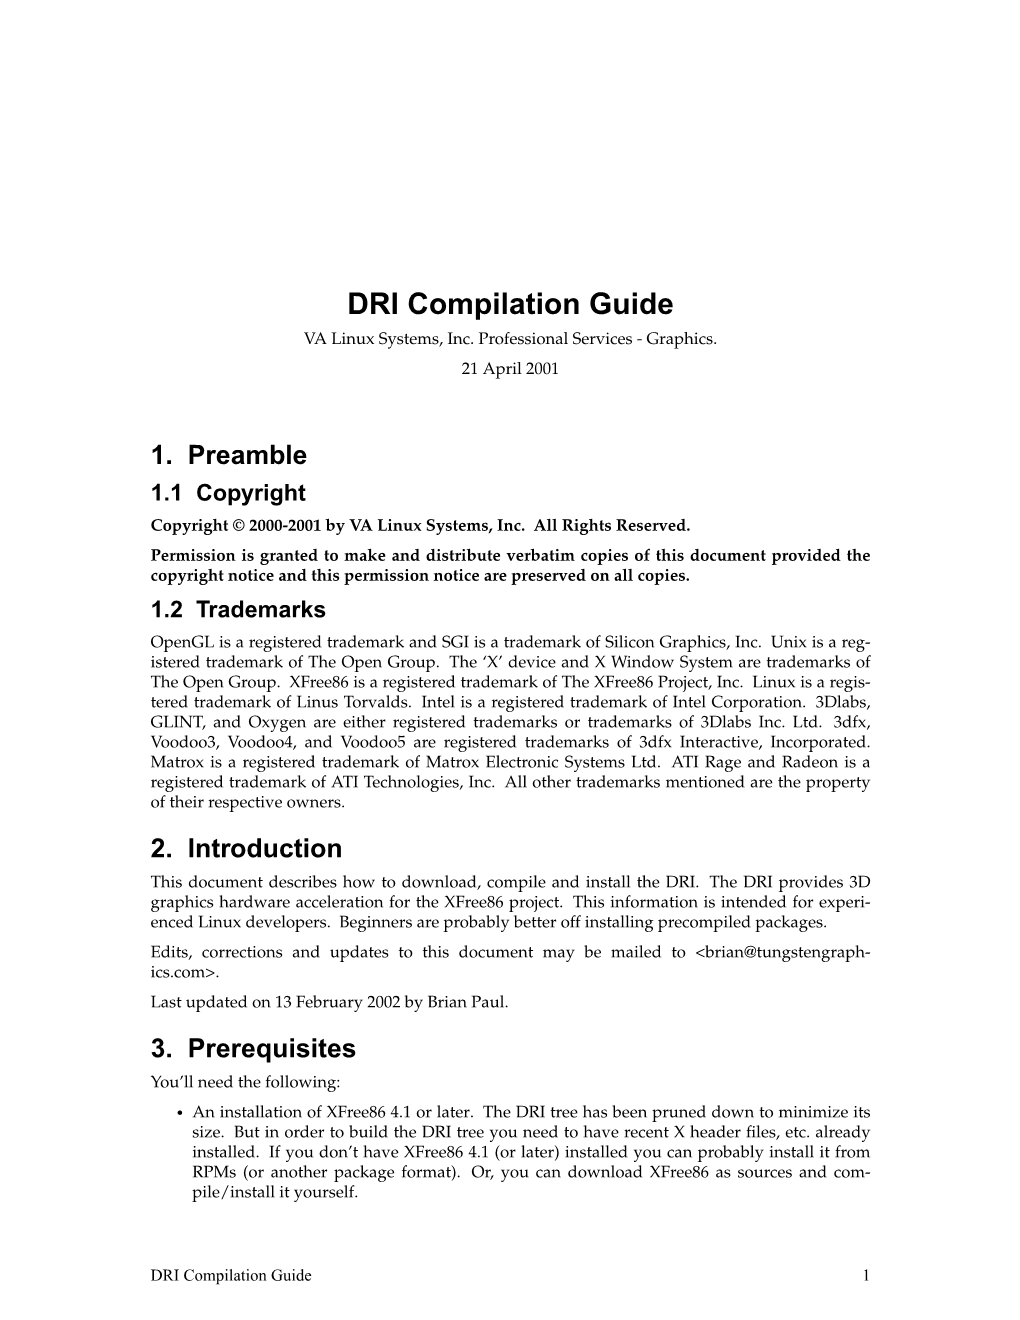 DRI Compilation Guide VA Linux Systems, Inc